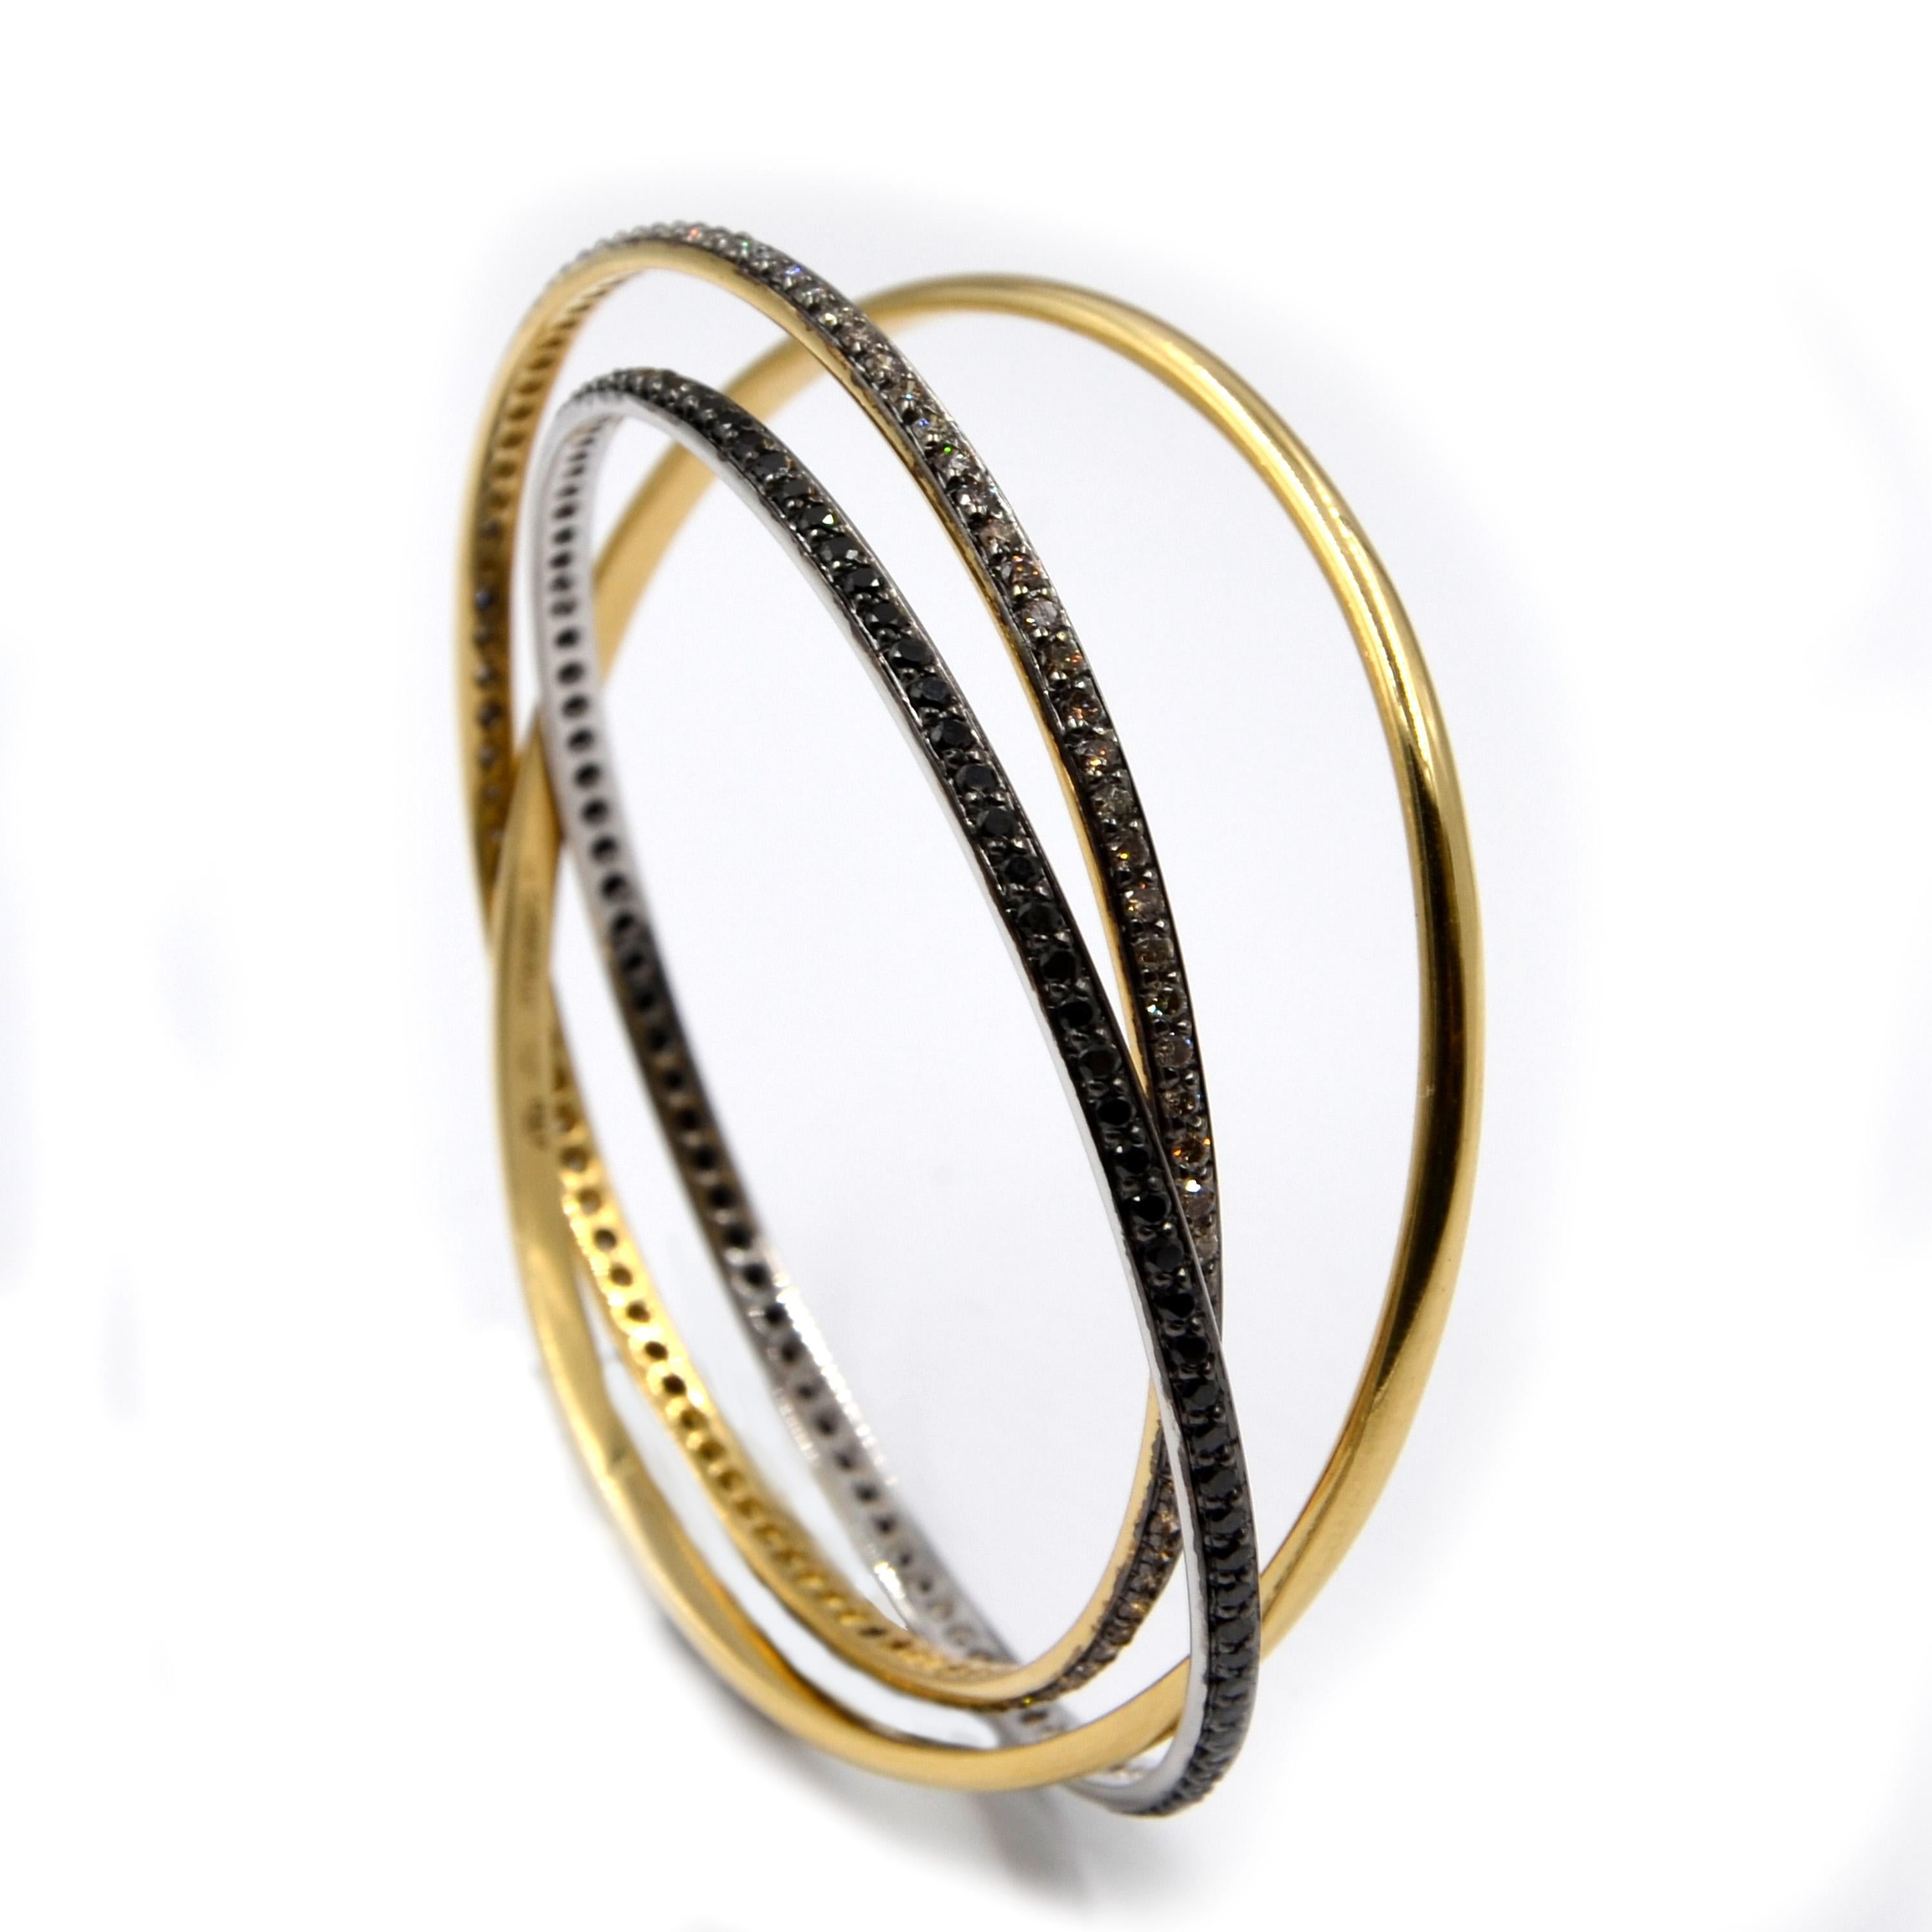 Garavelli 18 Karat Yellow Gold Black Brown Diamonds Rolling Bangle Bracelet
slip on bracelet diameter mm 60 
thickness mm.4 each band
GOLD gr : 42.02
BROWN DIAMONDS ct : 2,75
BLACK DIAMONDS ct : 2.98